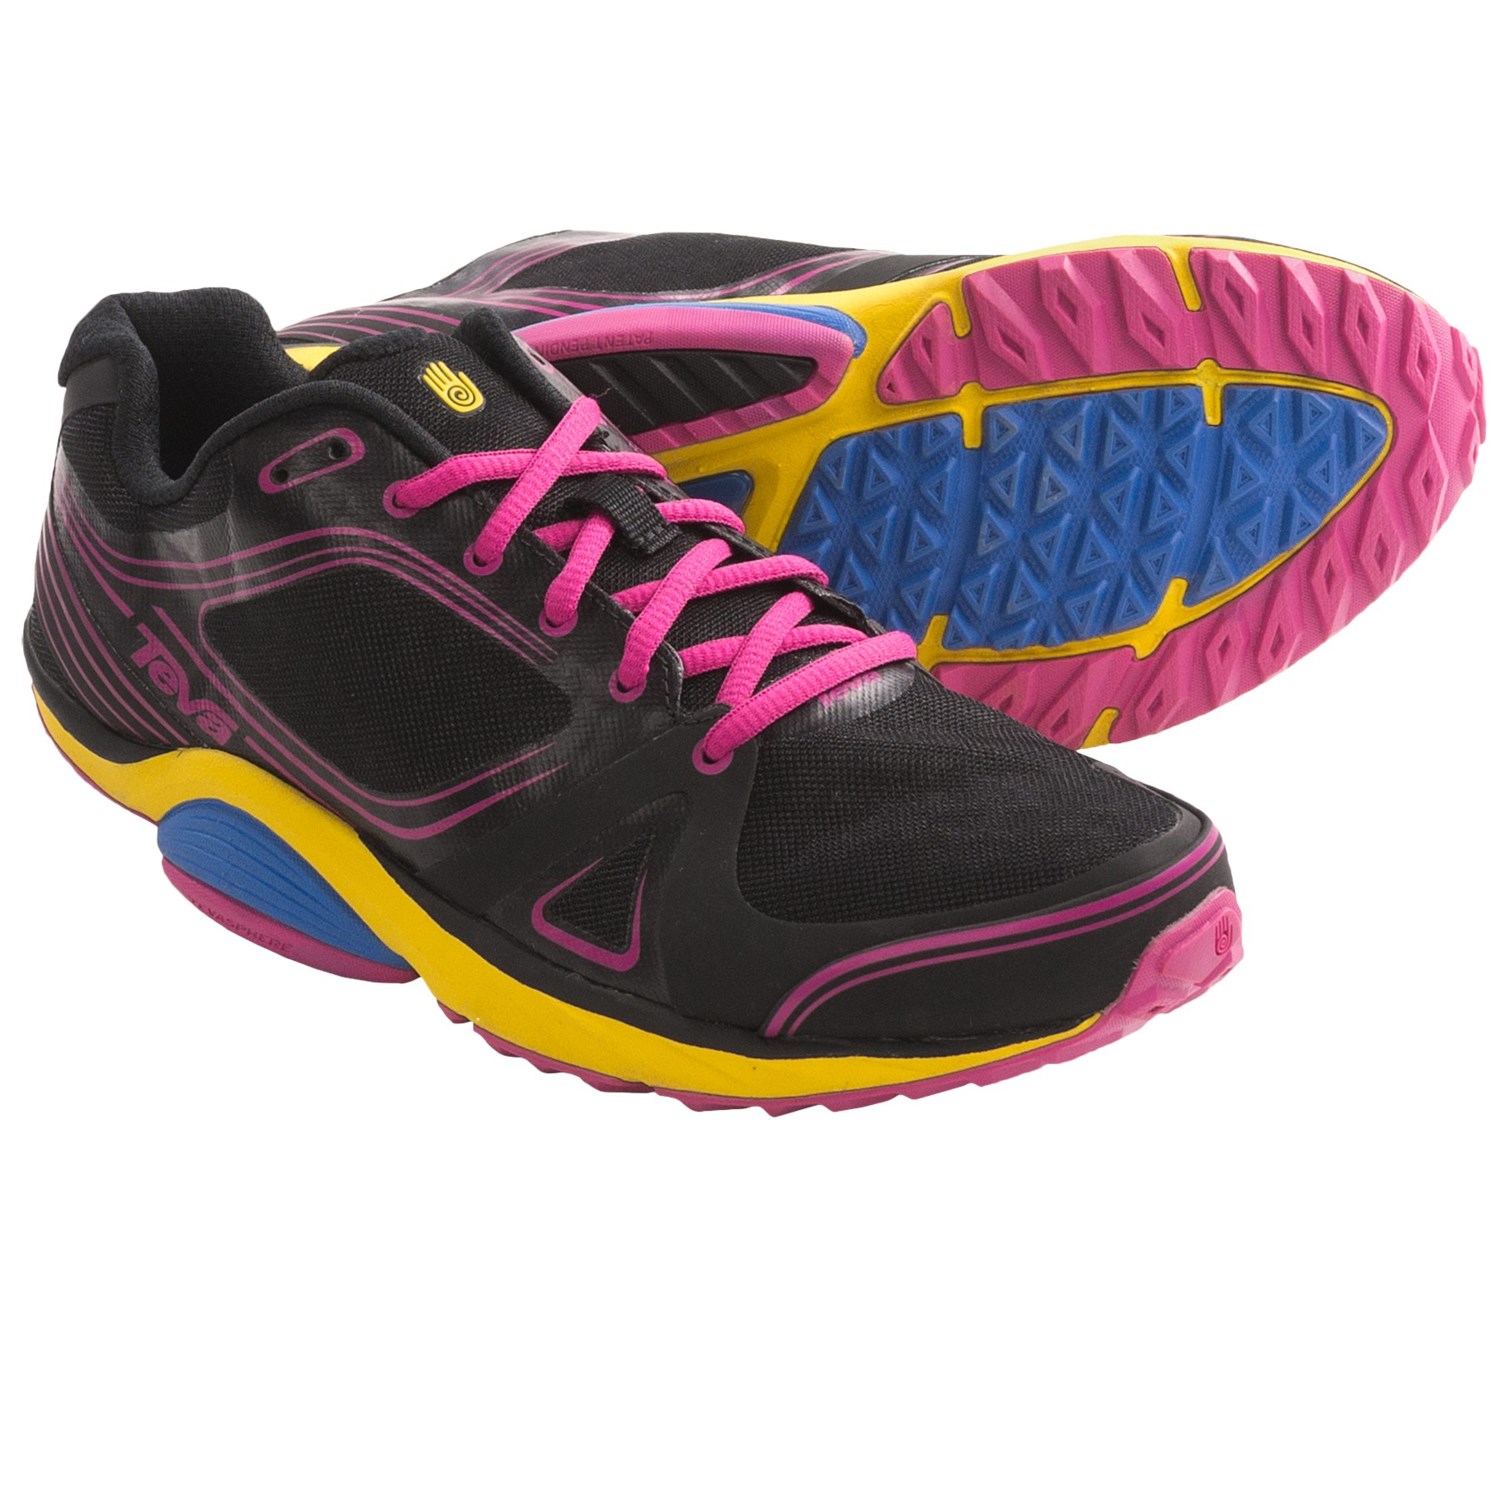 Teva Tevasphere Speed Trail Running Shoes (For Women) - Save 40%